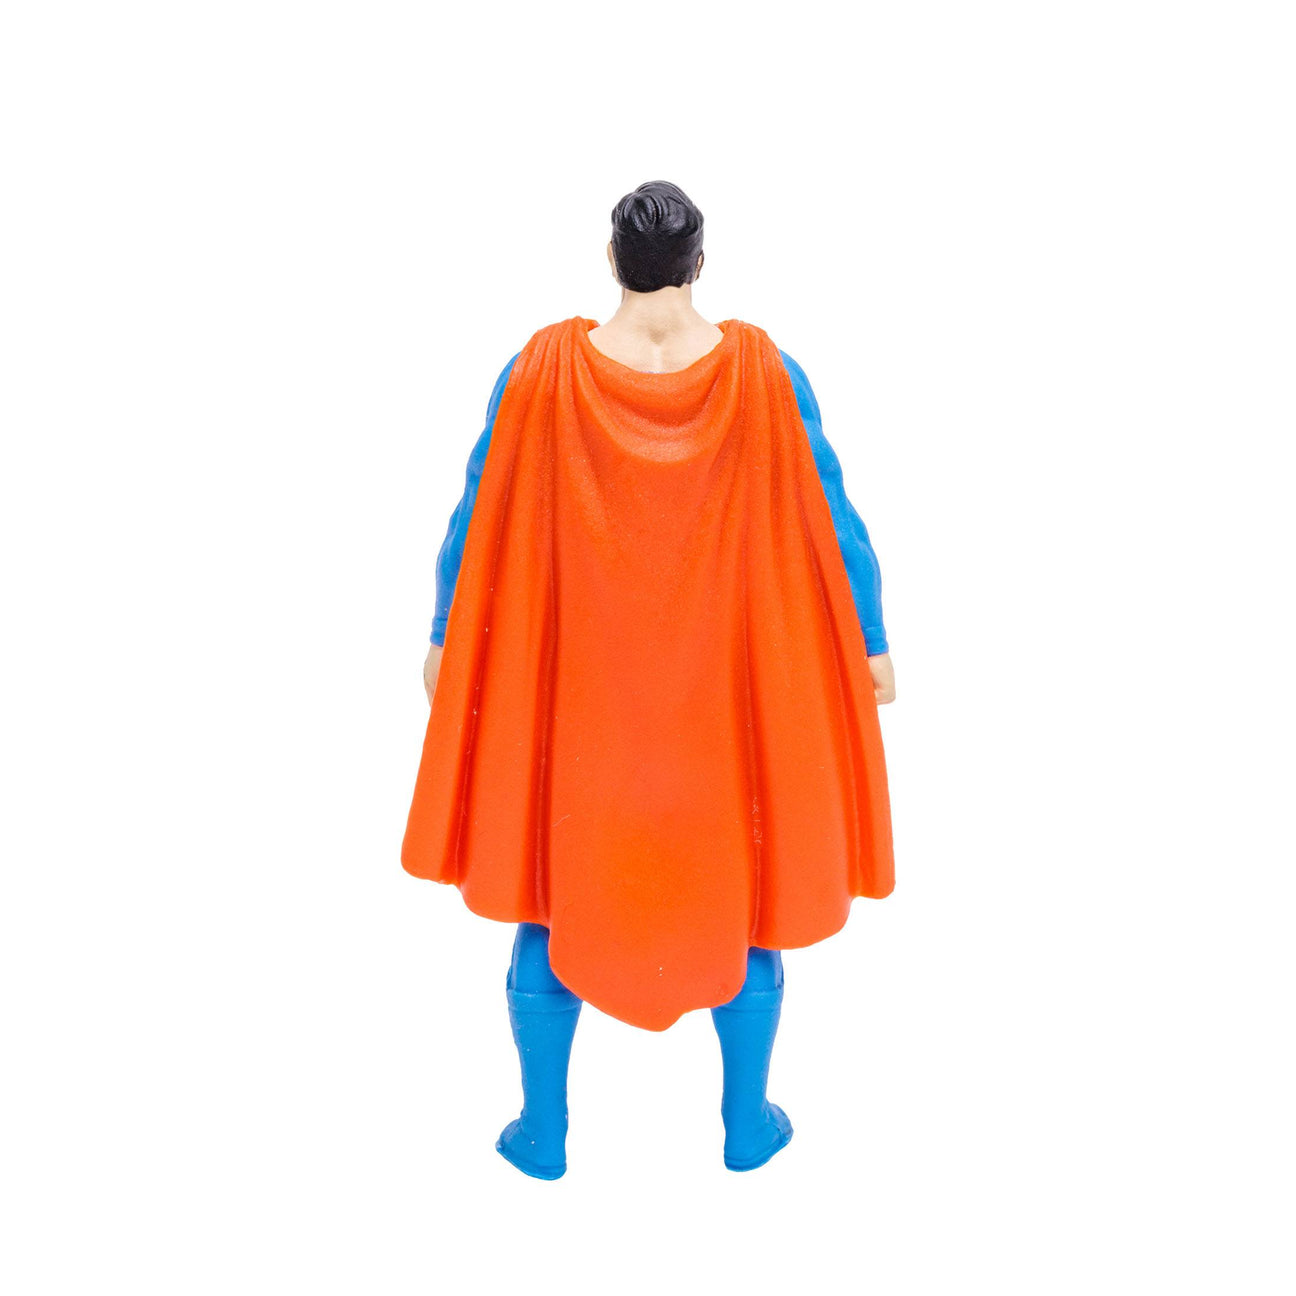 DC Page Punchers: Superman (Rebirth) - Actionfigur & Comic-Actionfiguren-McFarlane Toys-Mighty Underground